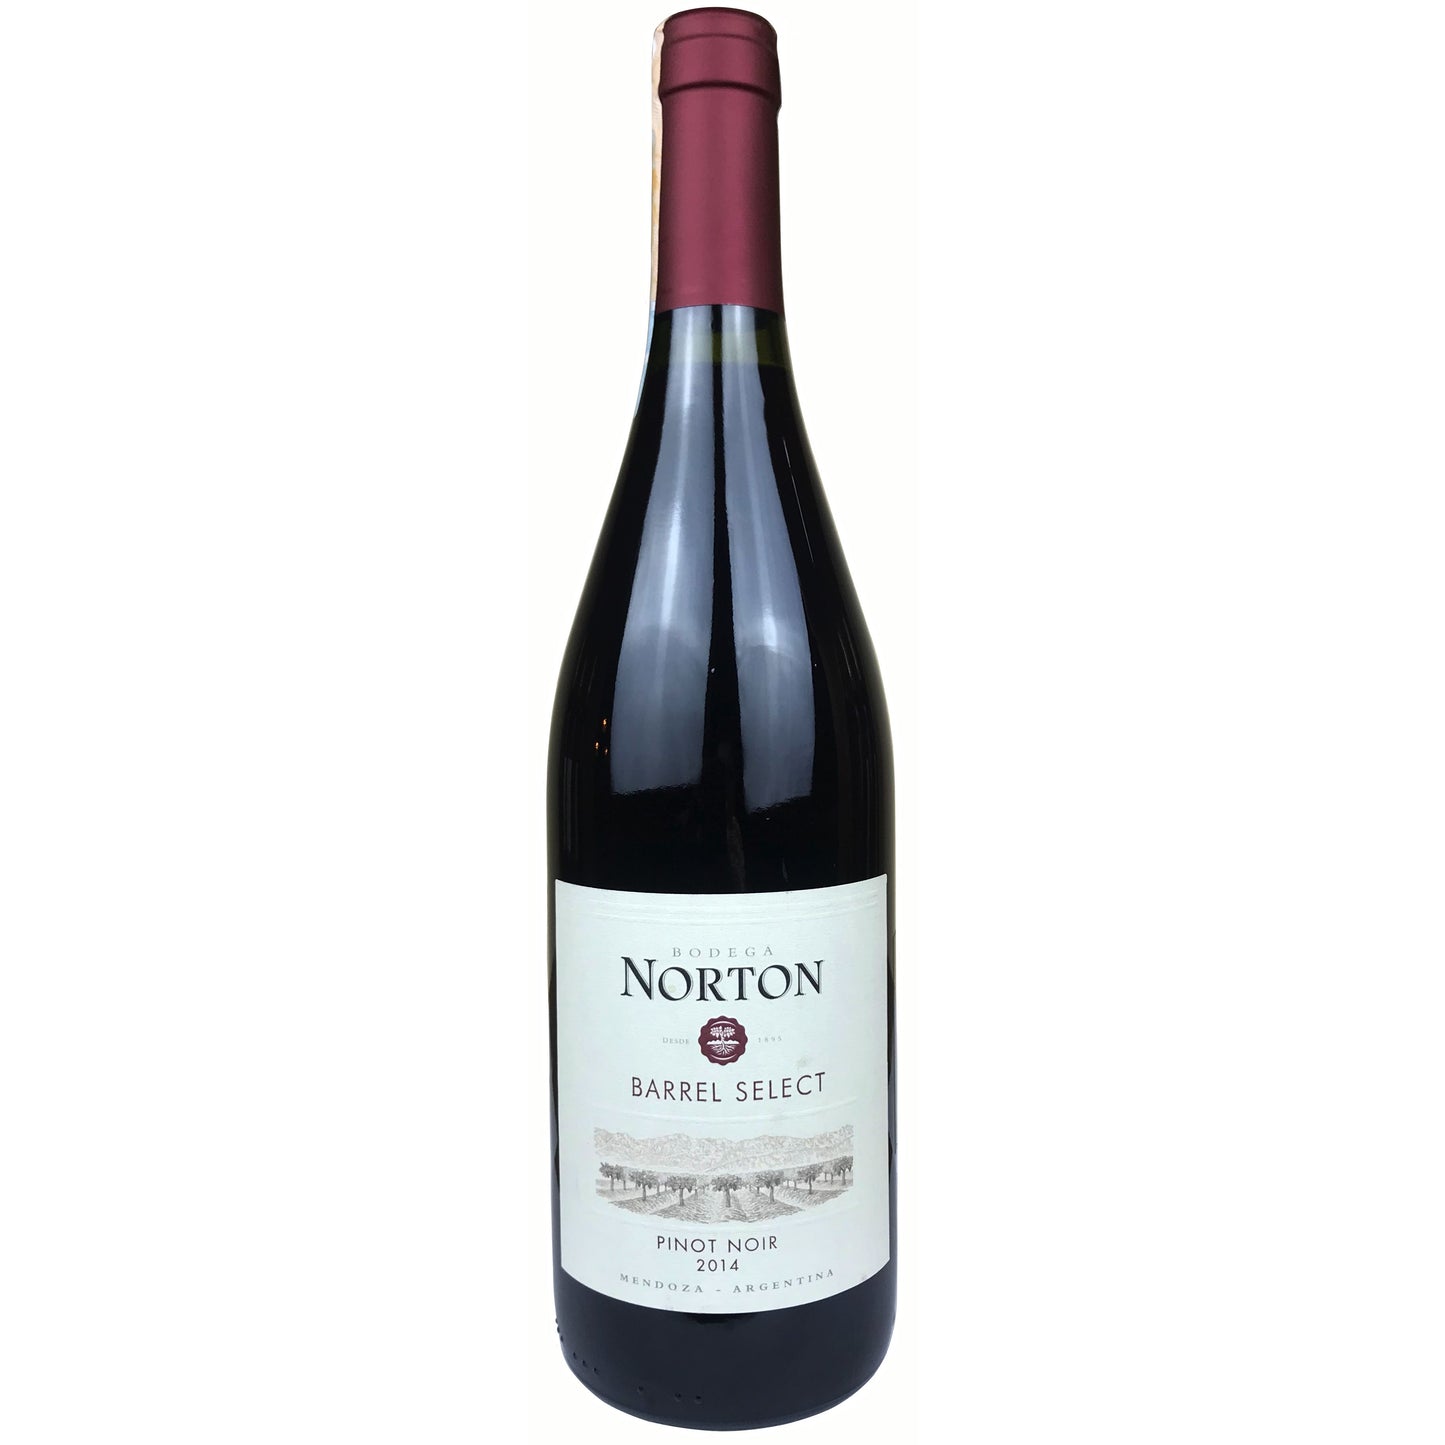 Bodega Norton Barrel Select Pinot Noir